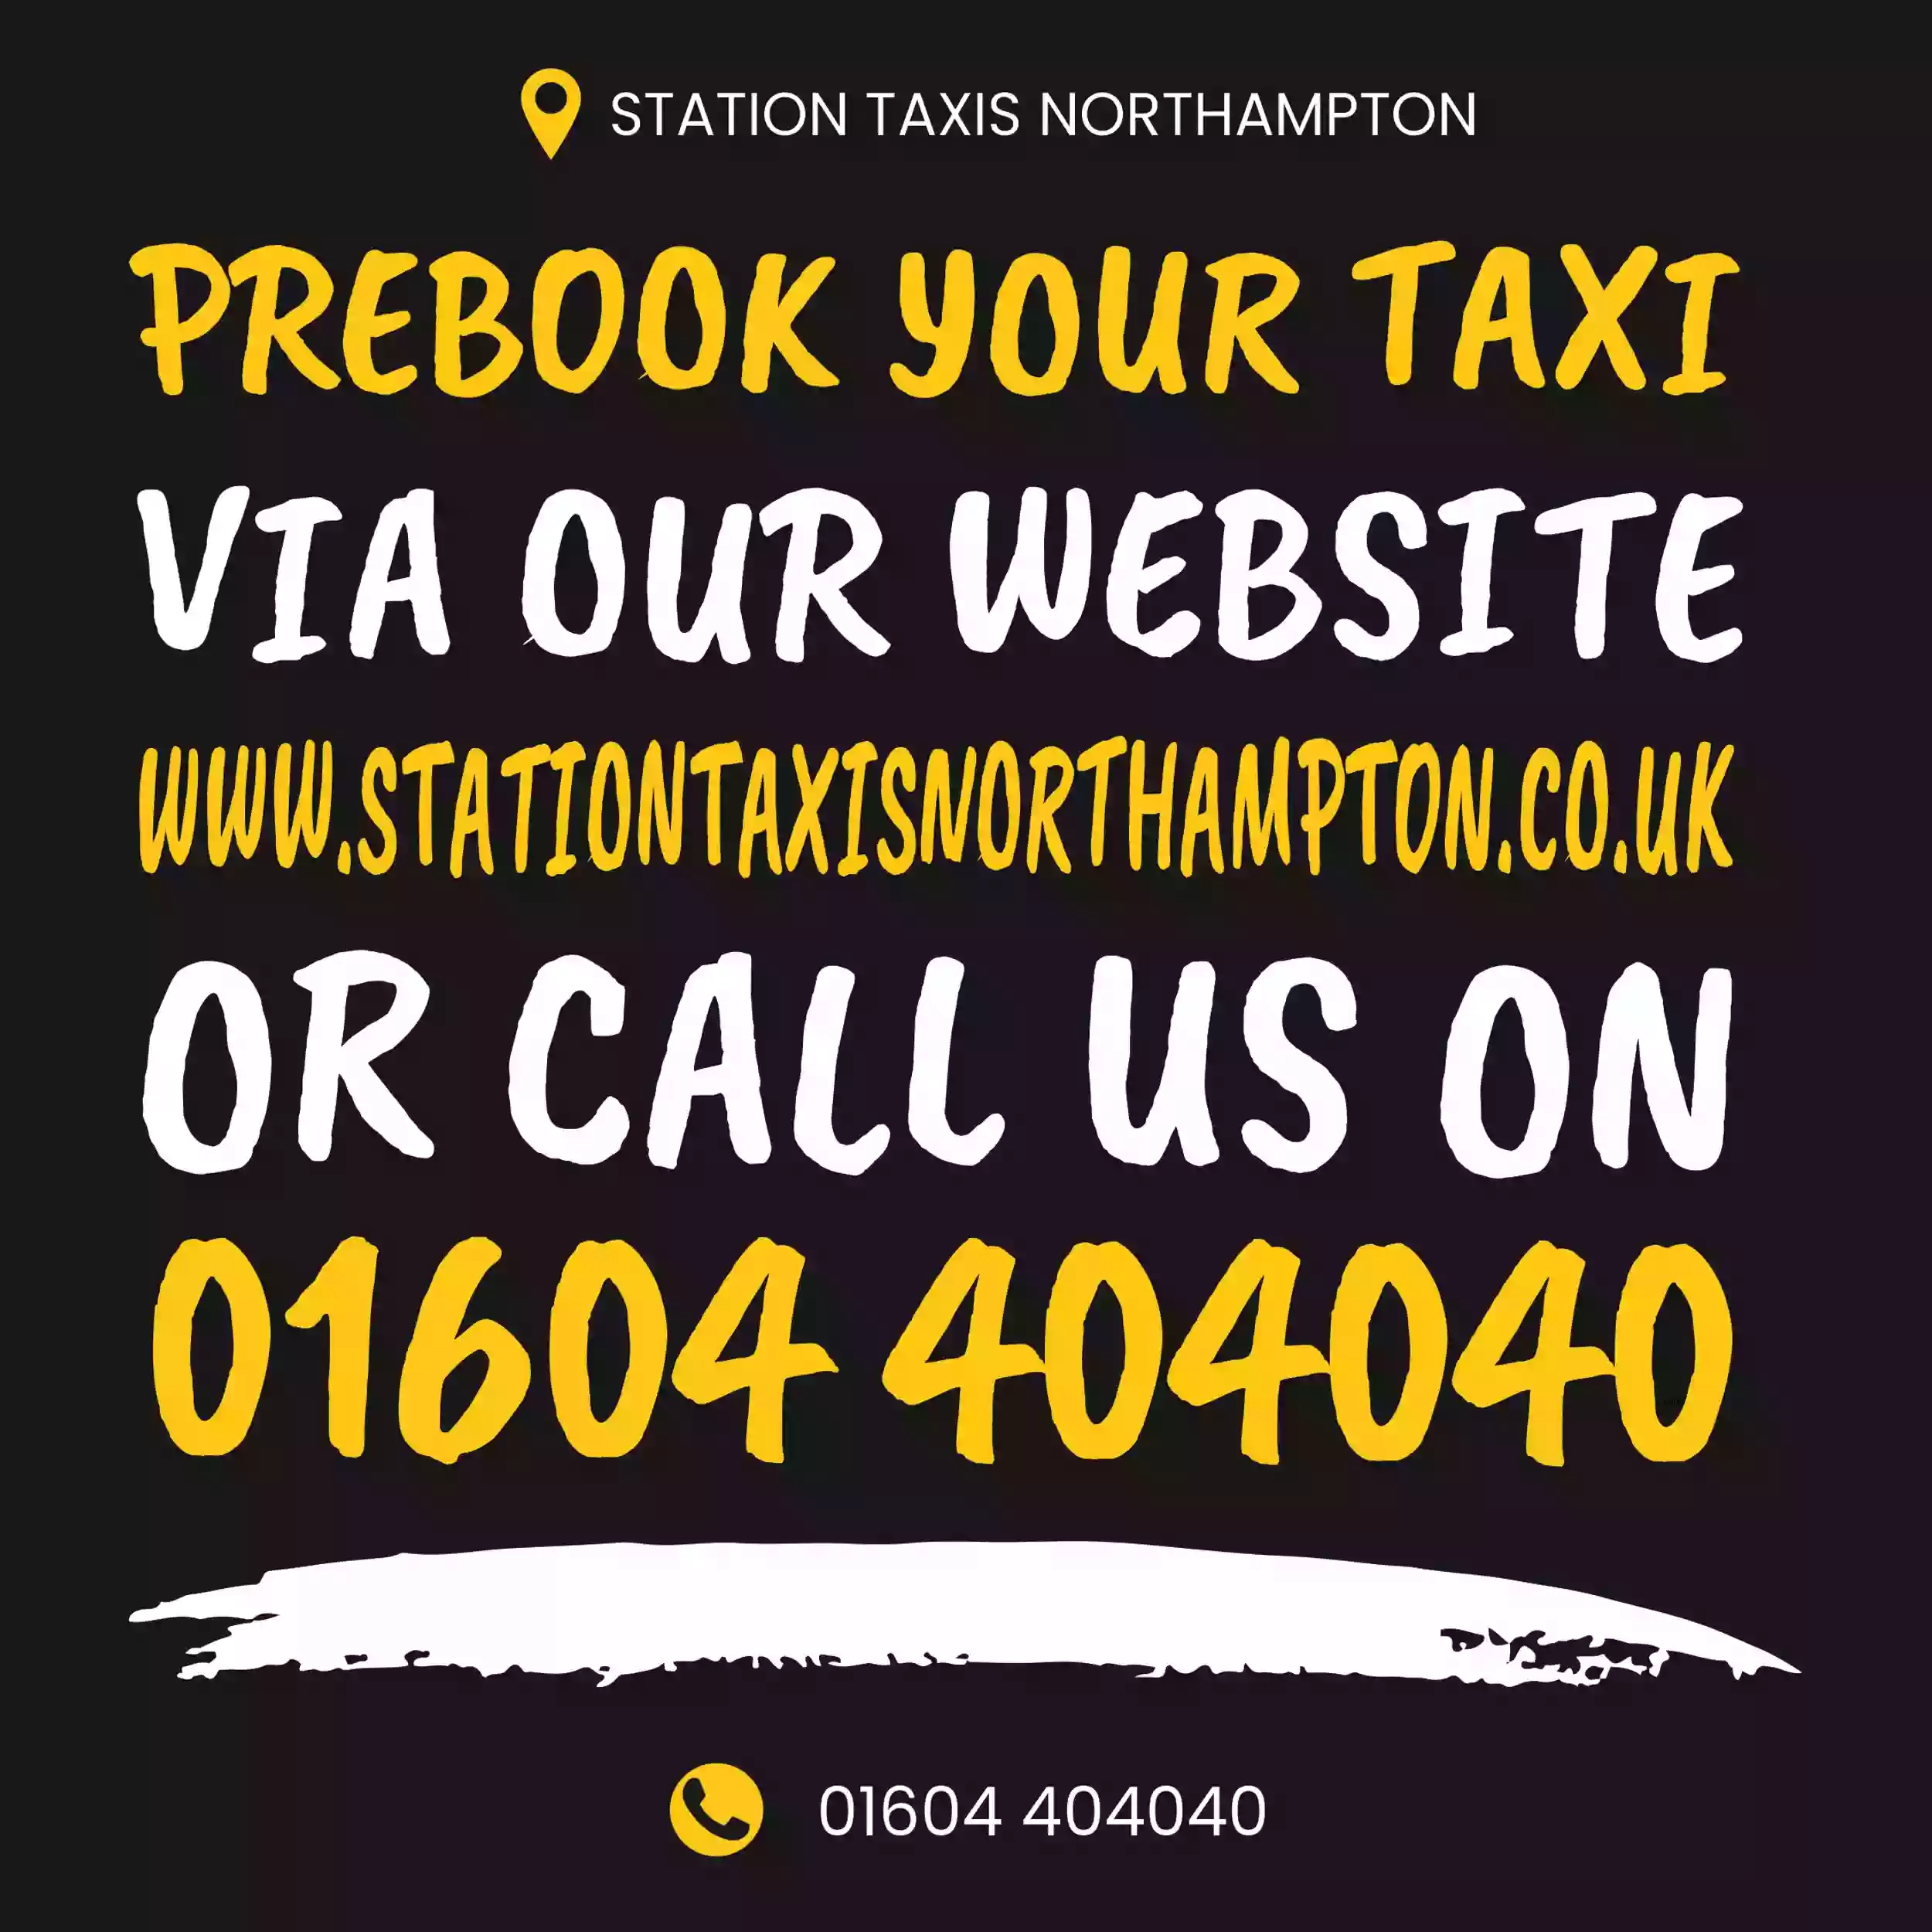 Station Taxis Northampton